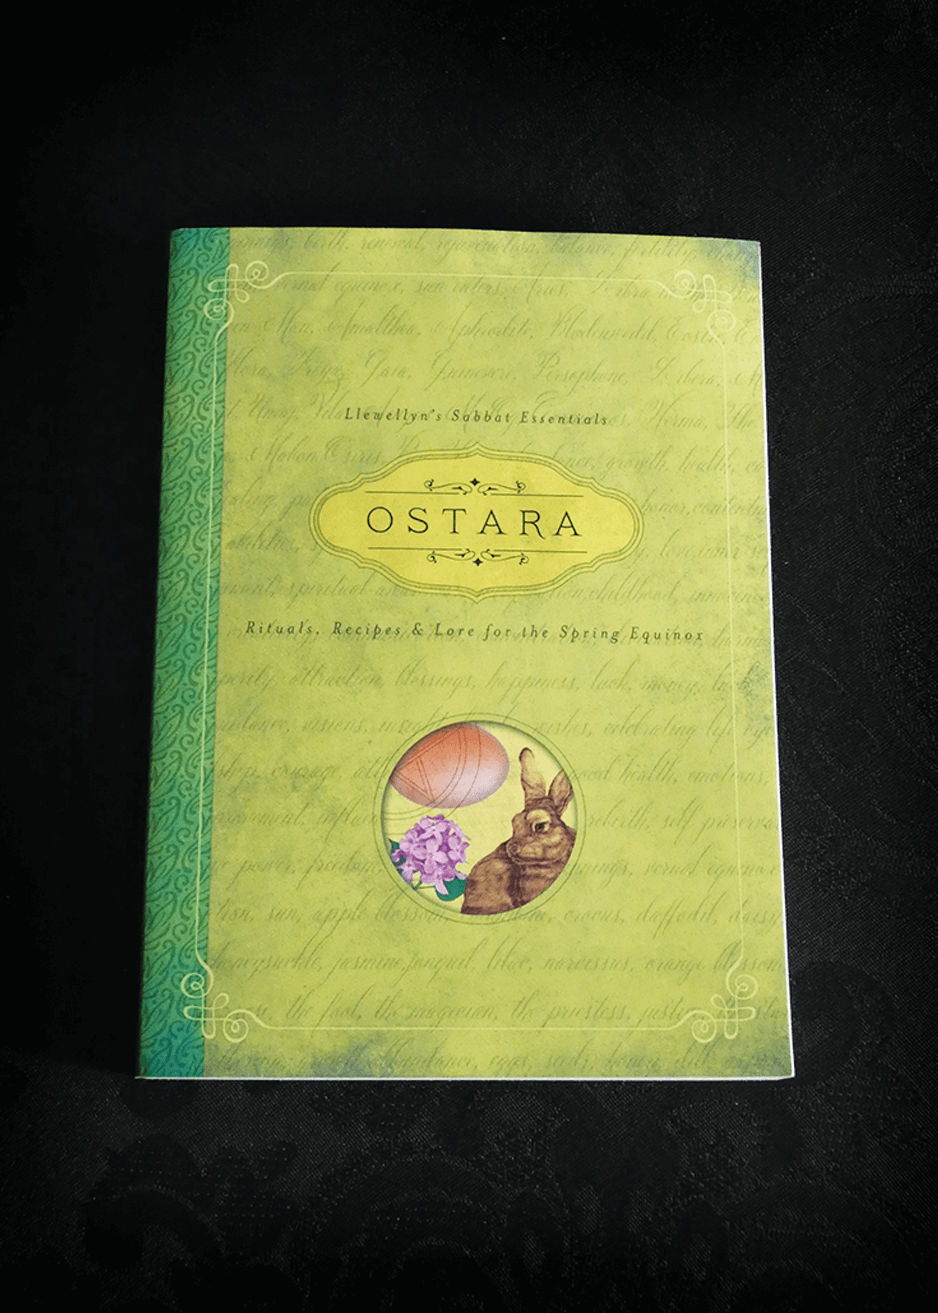 Ostara: Rituals, Recipes & Lore for the Spring Equinox